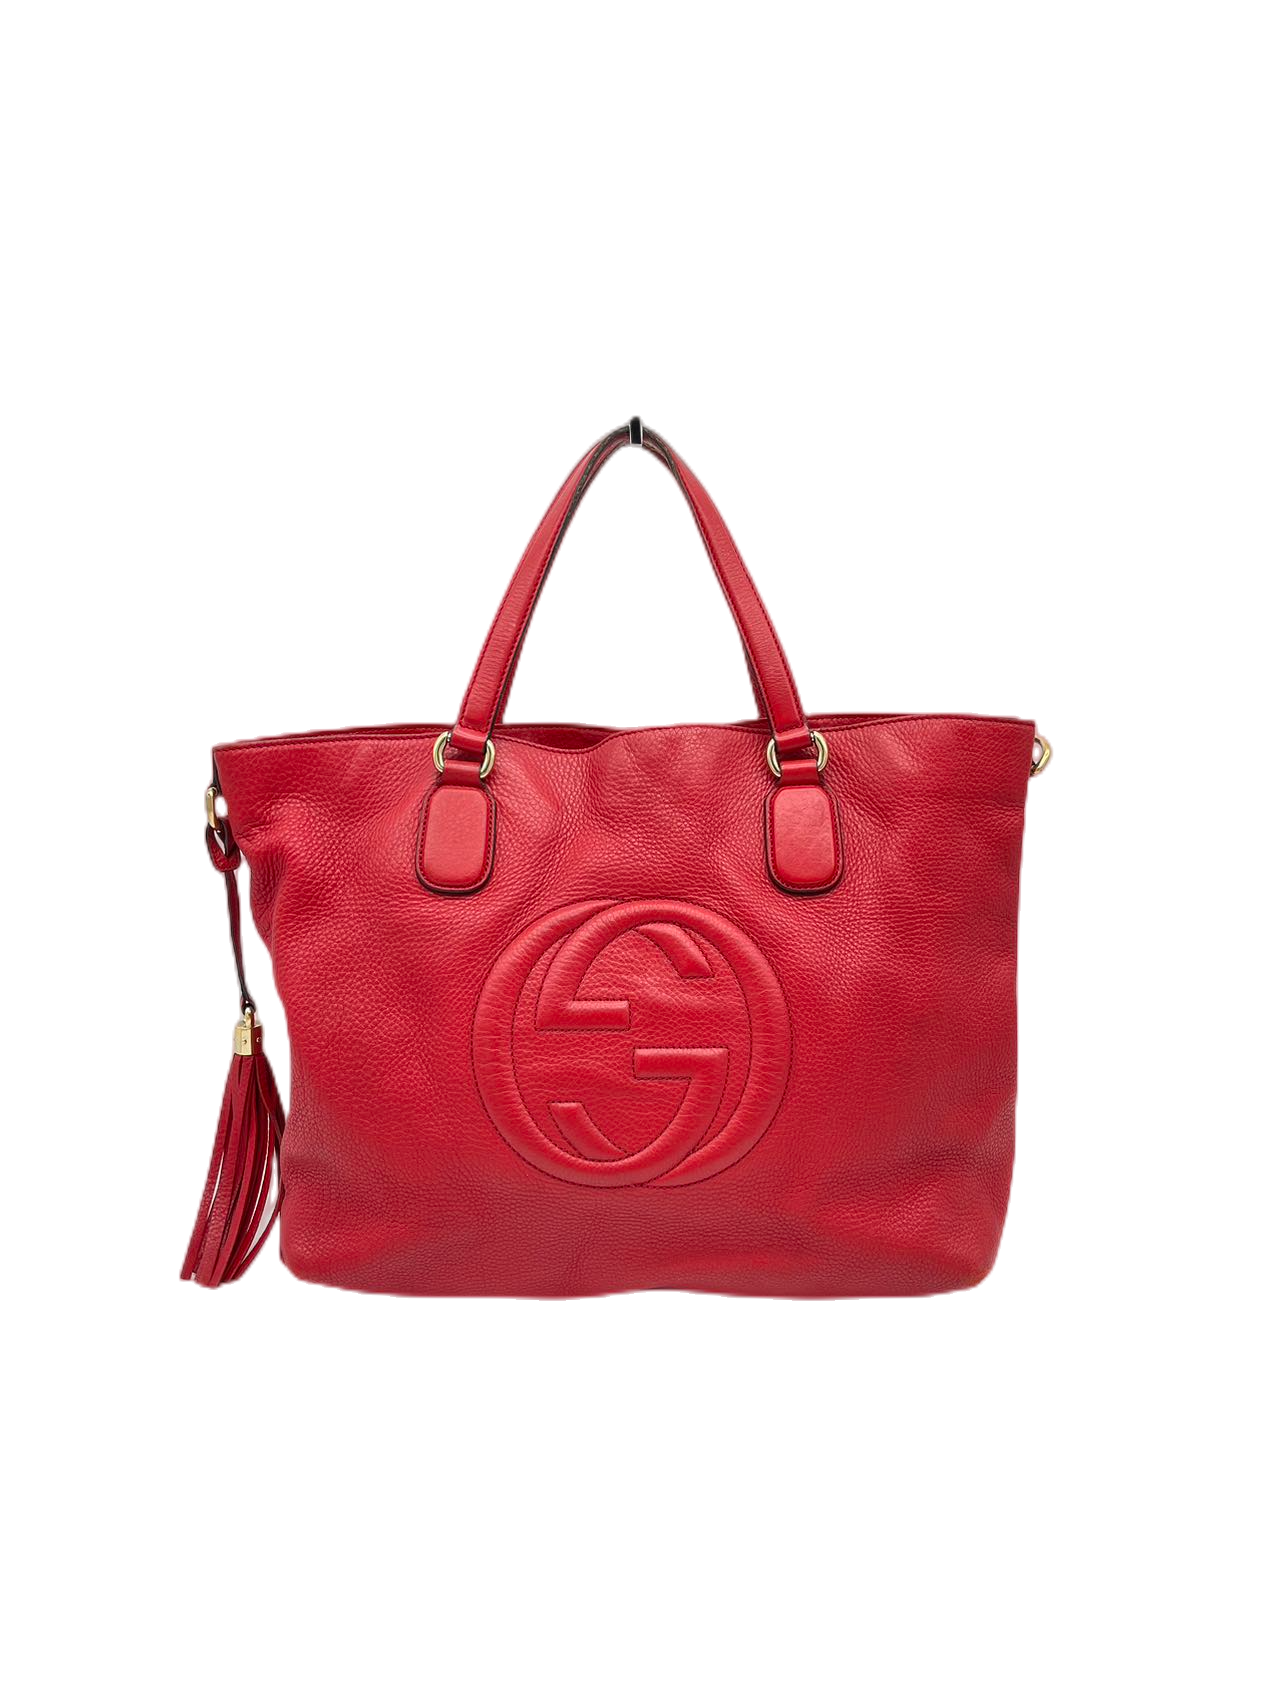 Preloved Gucci GG Logo Red Leather Soho Tassel Bag Satchel